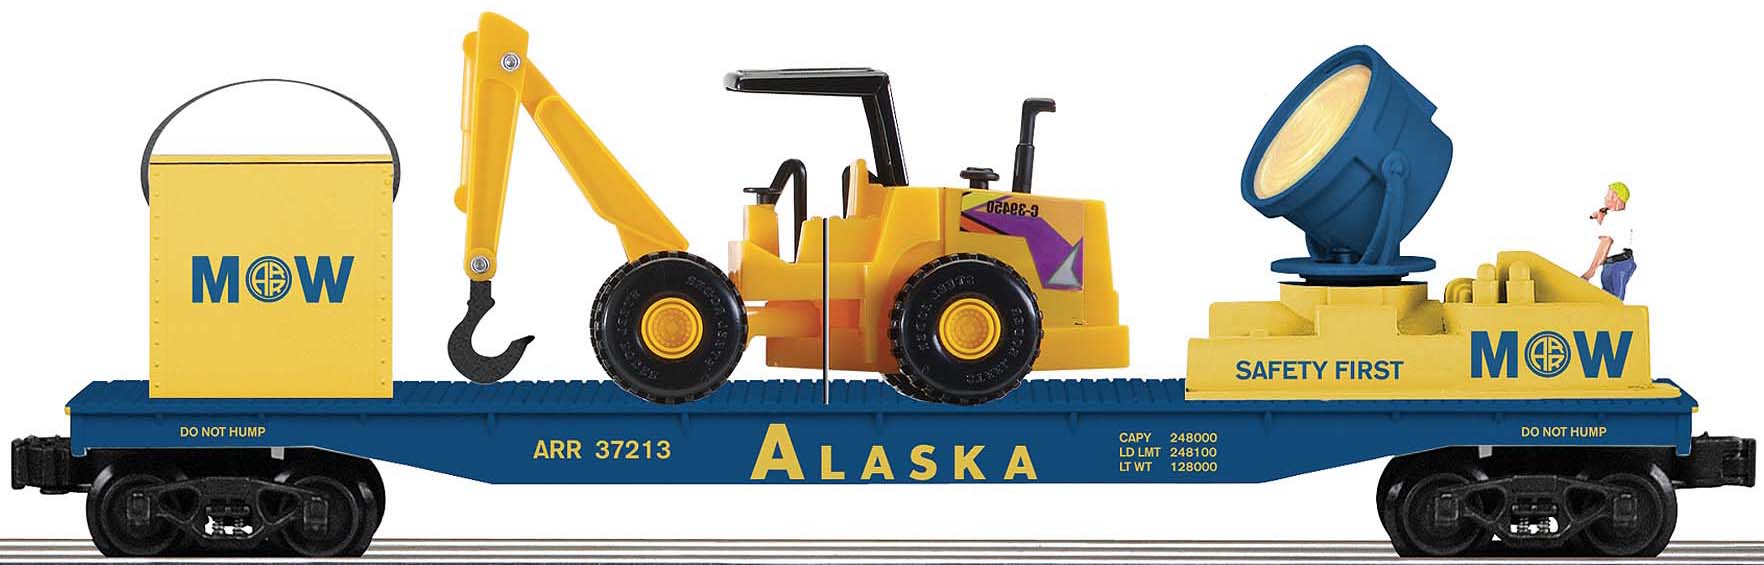 Alaska Searchlight Car with Vehicle image